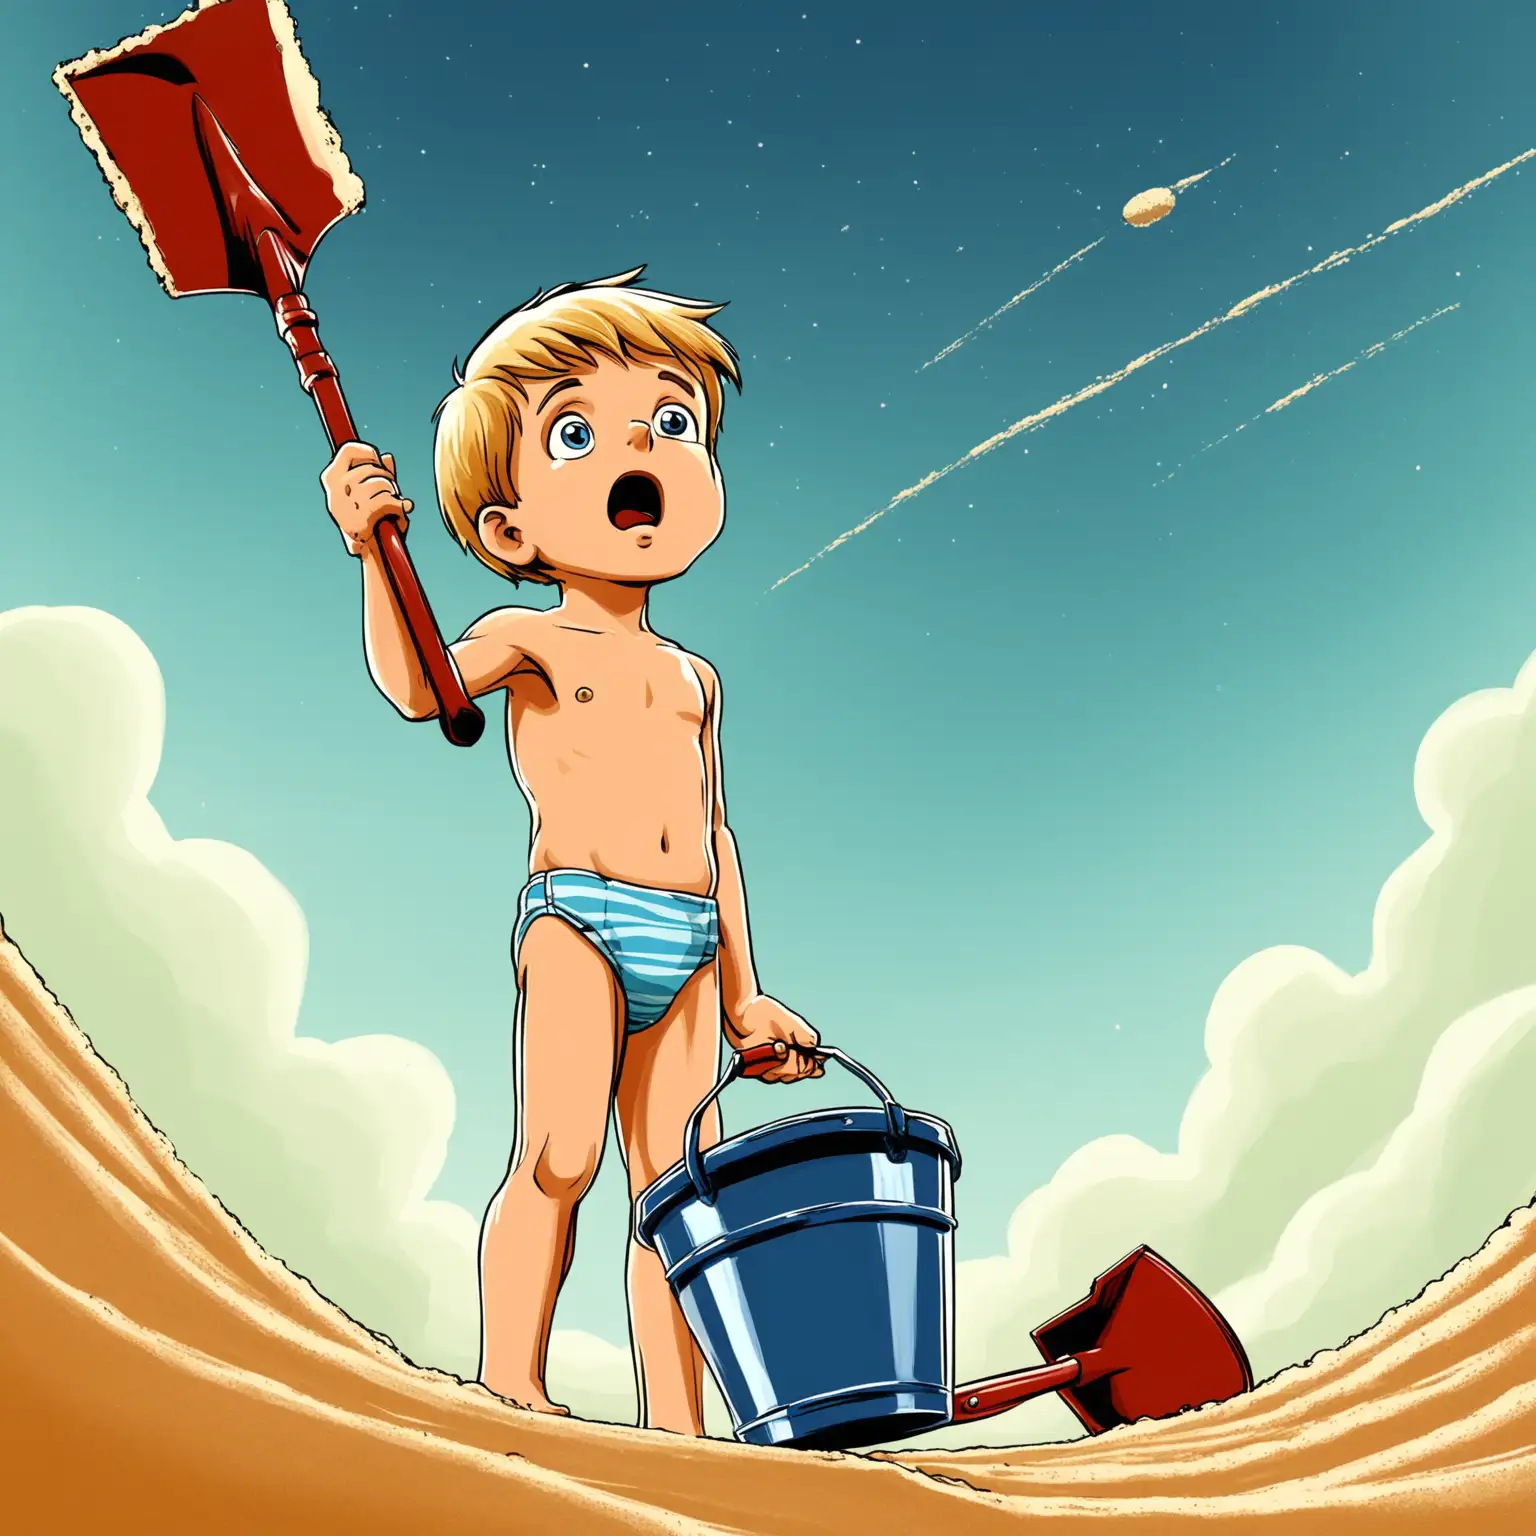 Cartoony Beach Fun Playful Boy with Sand Pail and Shovel